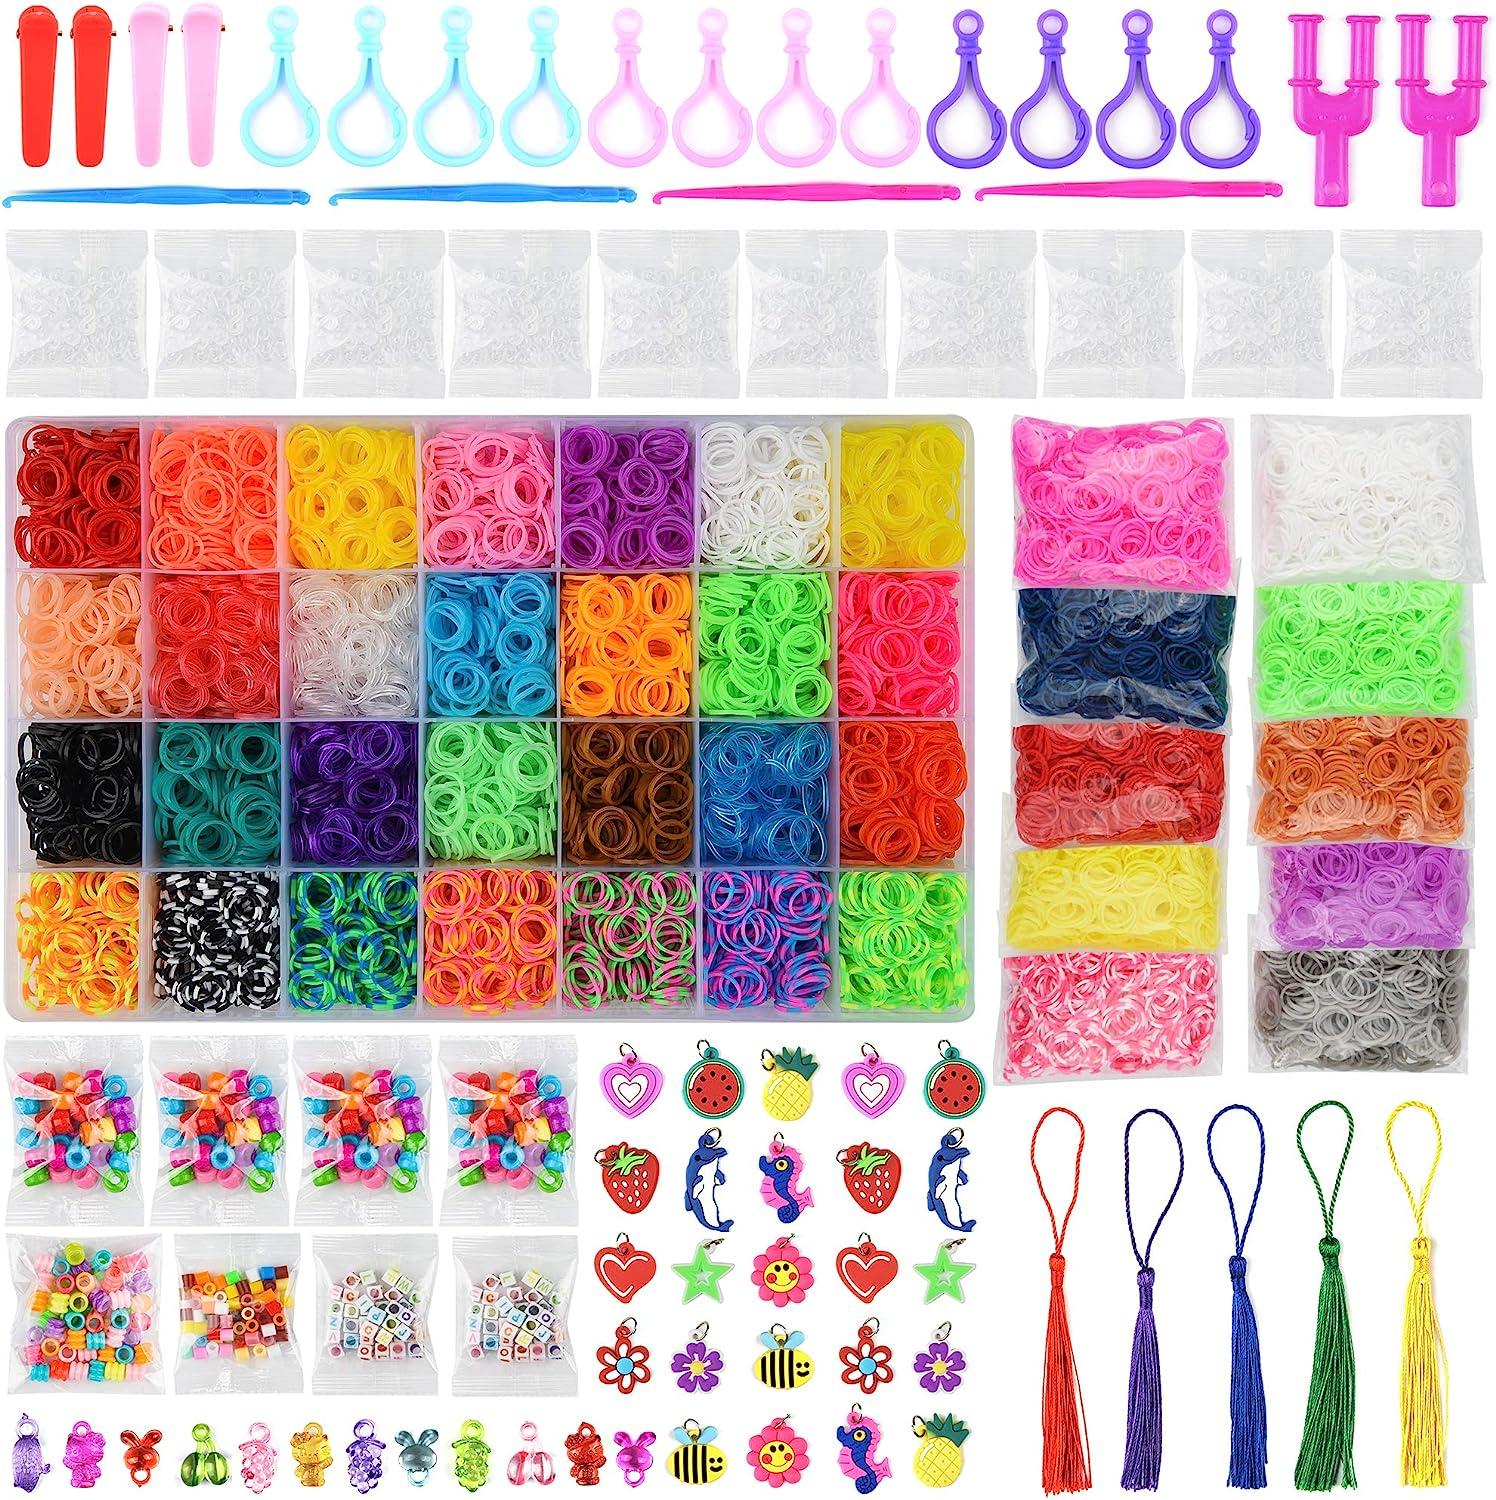 MUDO NEST 20000+Loom Bands Kit:19,000 DIY Rubber Bands Kits 38 Unique  Colors500 Clips,40 CharmsLoom Bracelet Making Kits for Kids